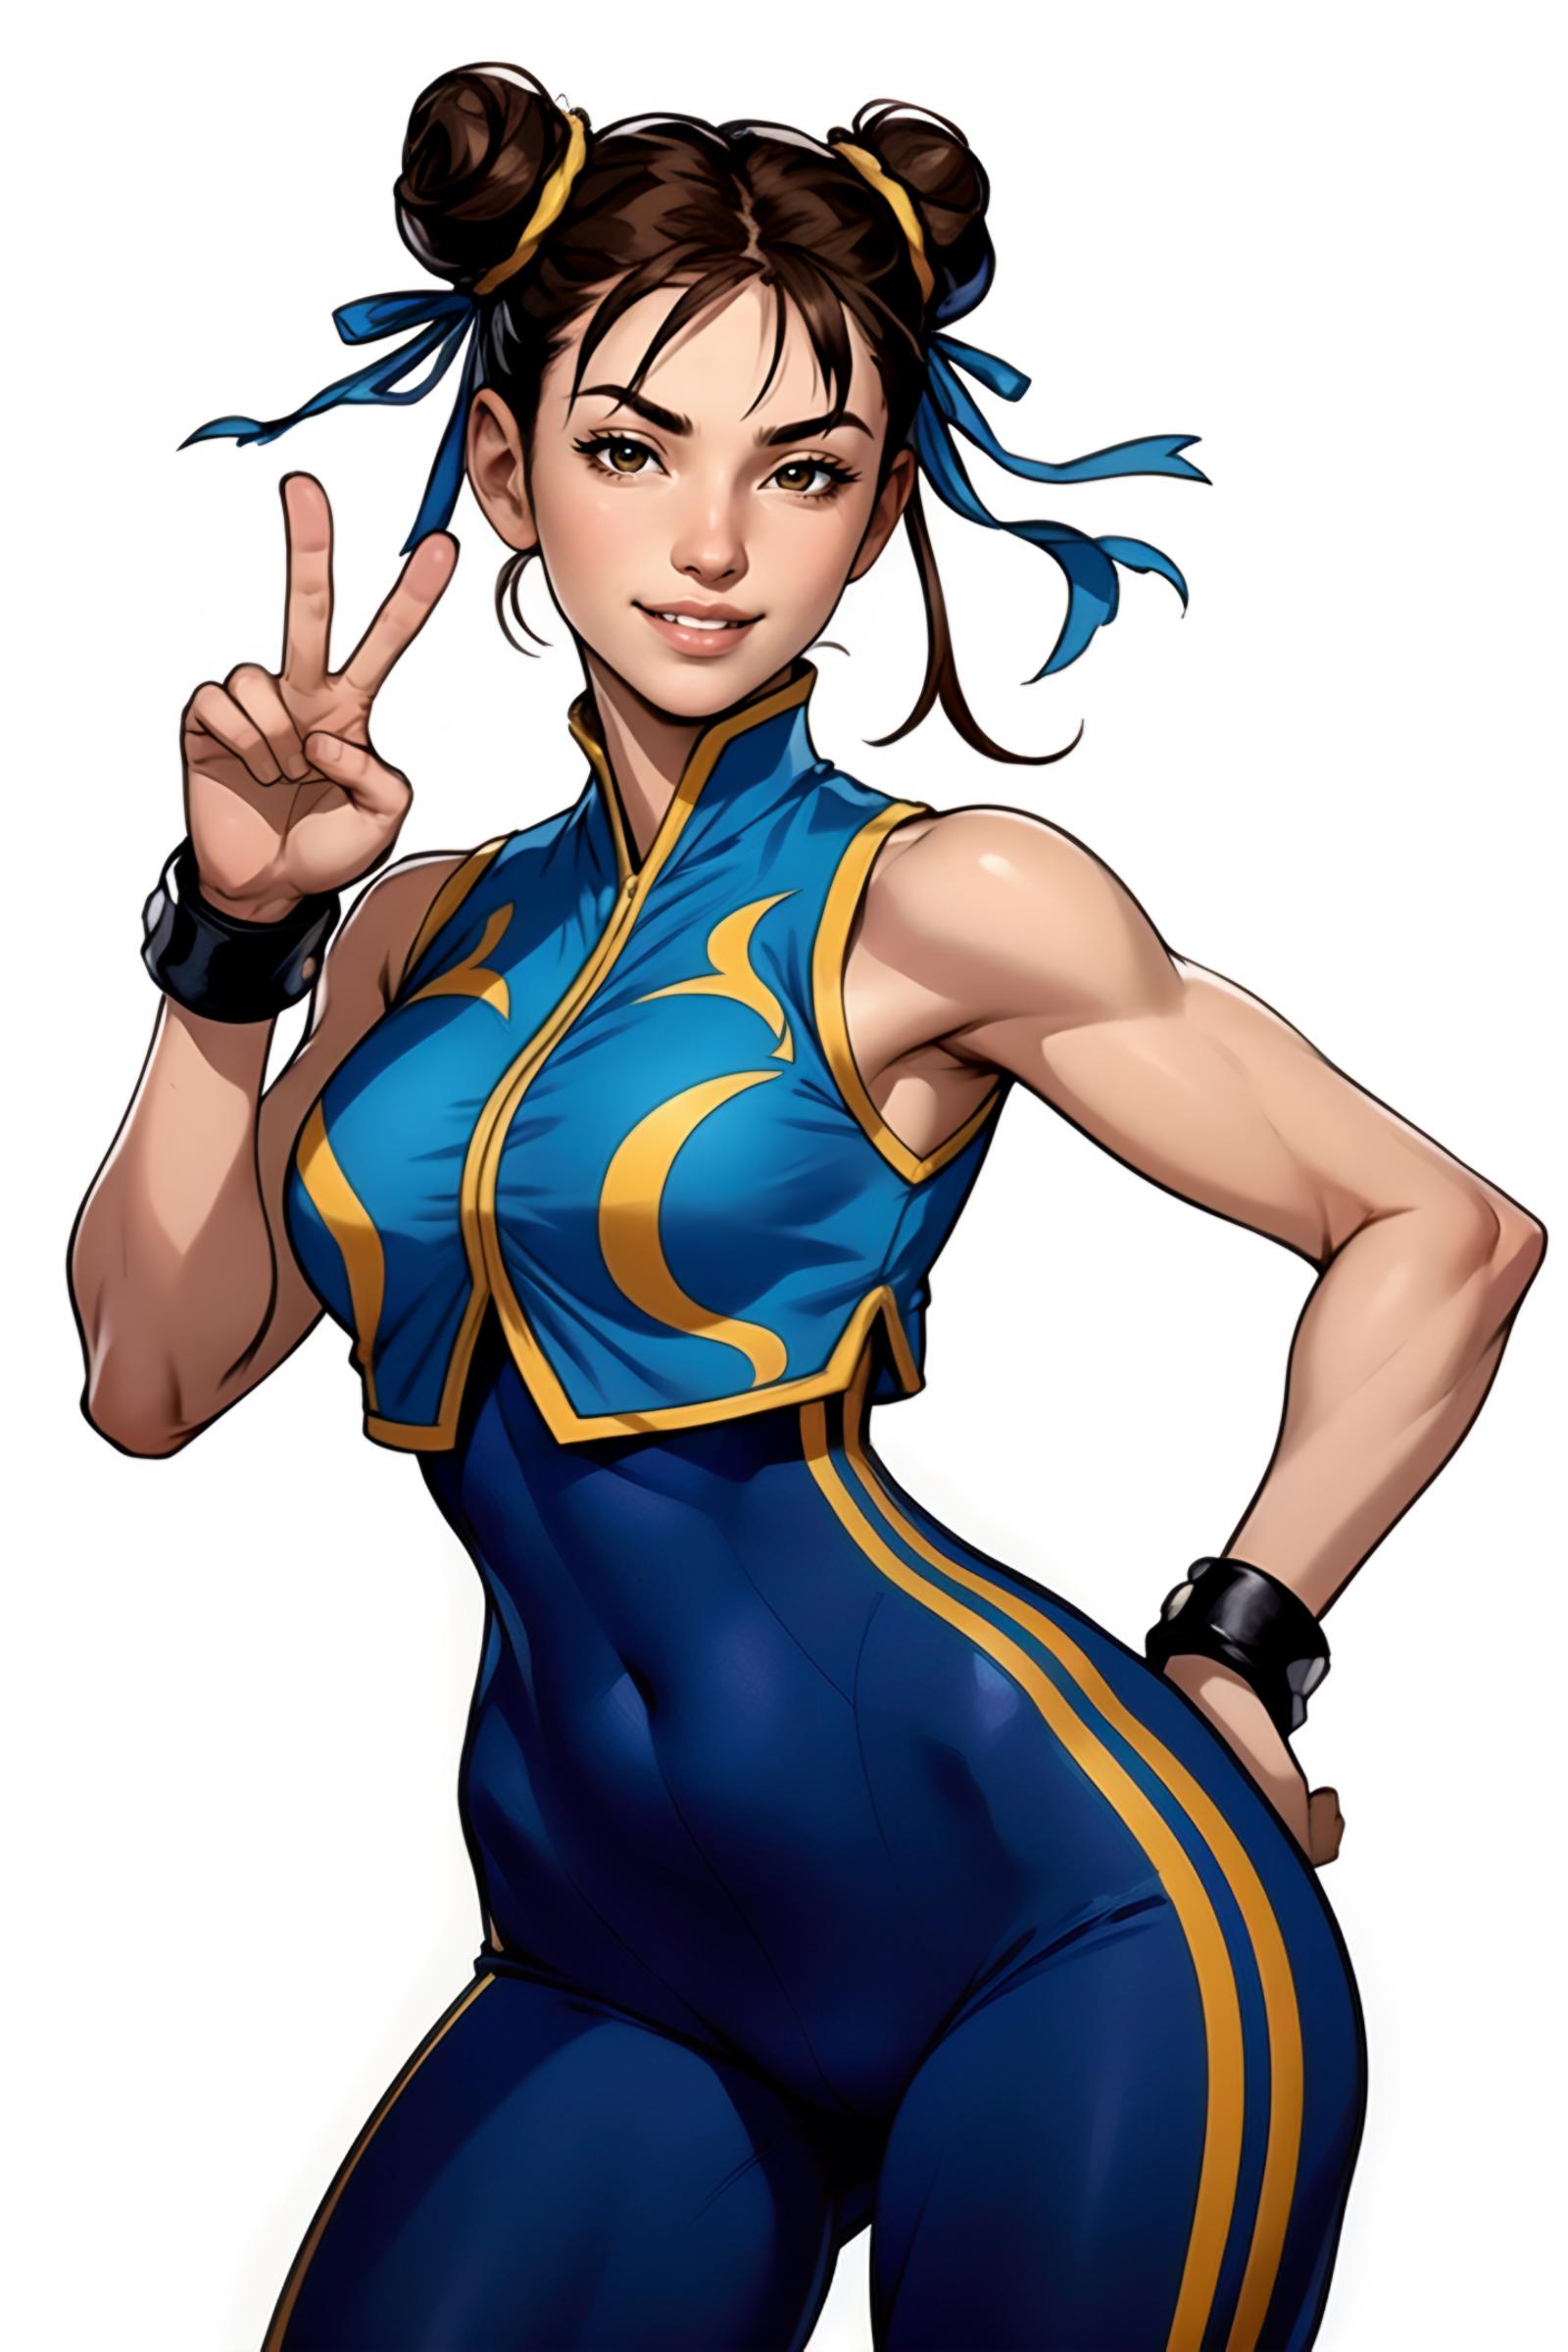 Chun-Li - Street Fighter (separate costumes) image by jetraxxx